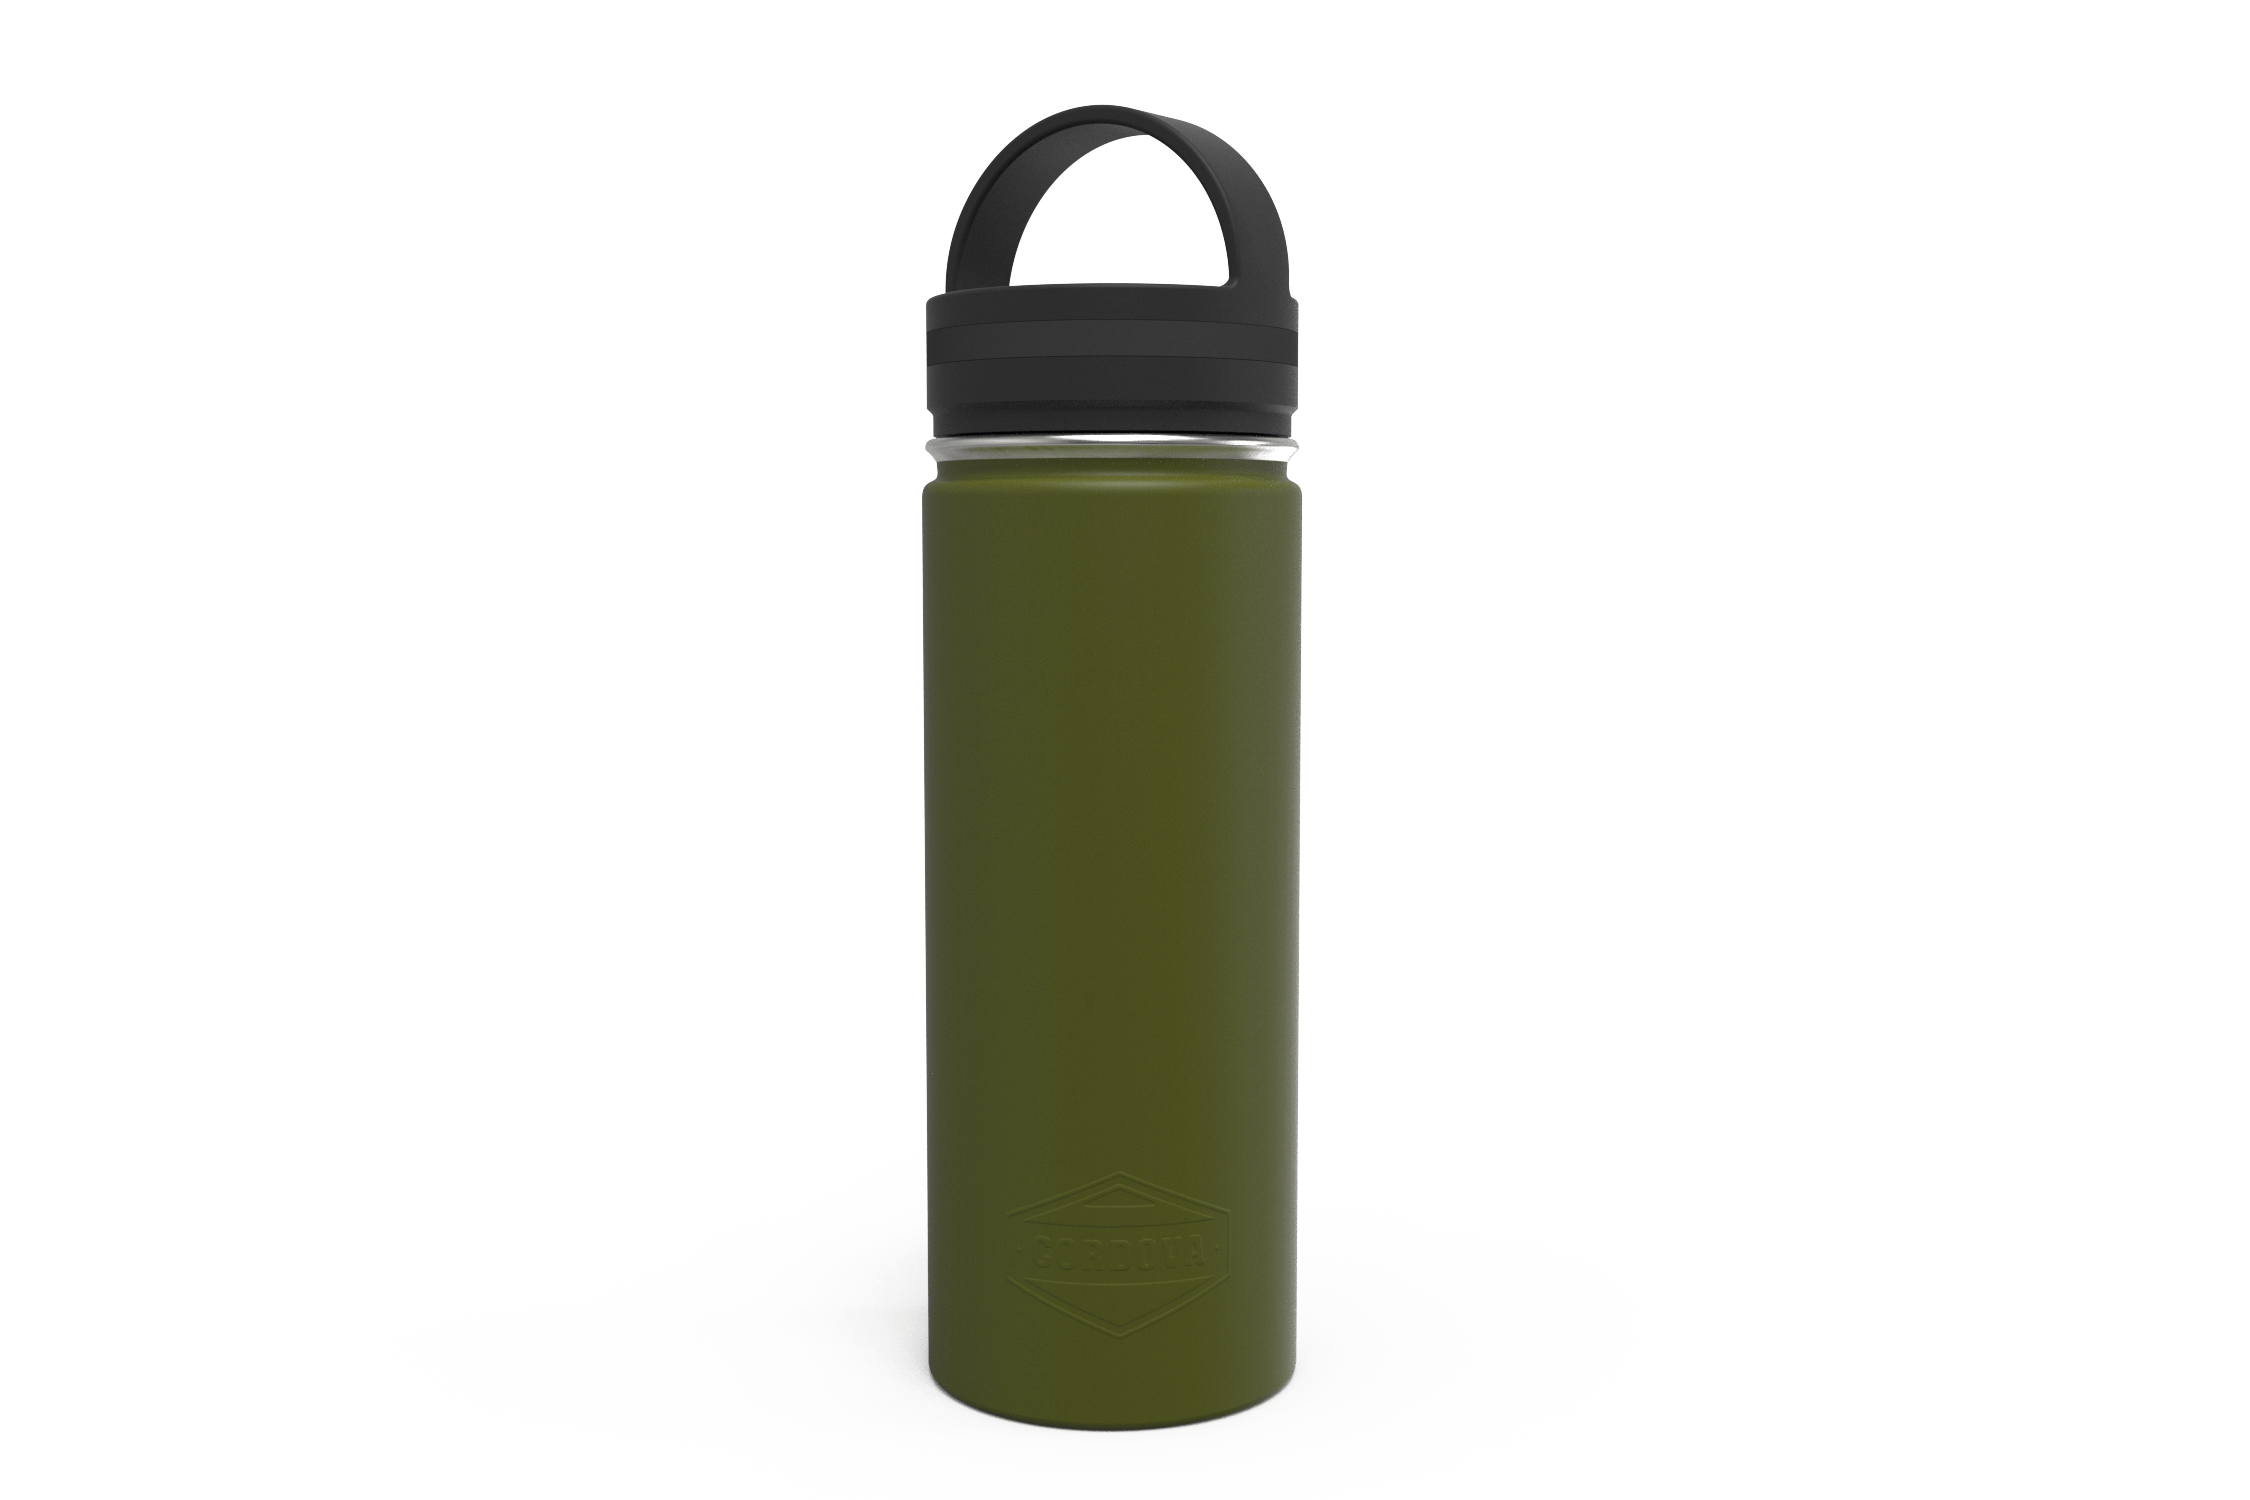 18 oz. Personalized Neon Reusable BPA-Free Plastic Water Bottles